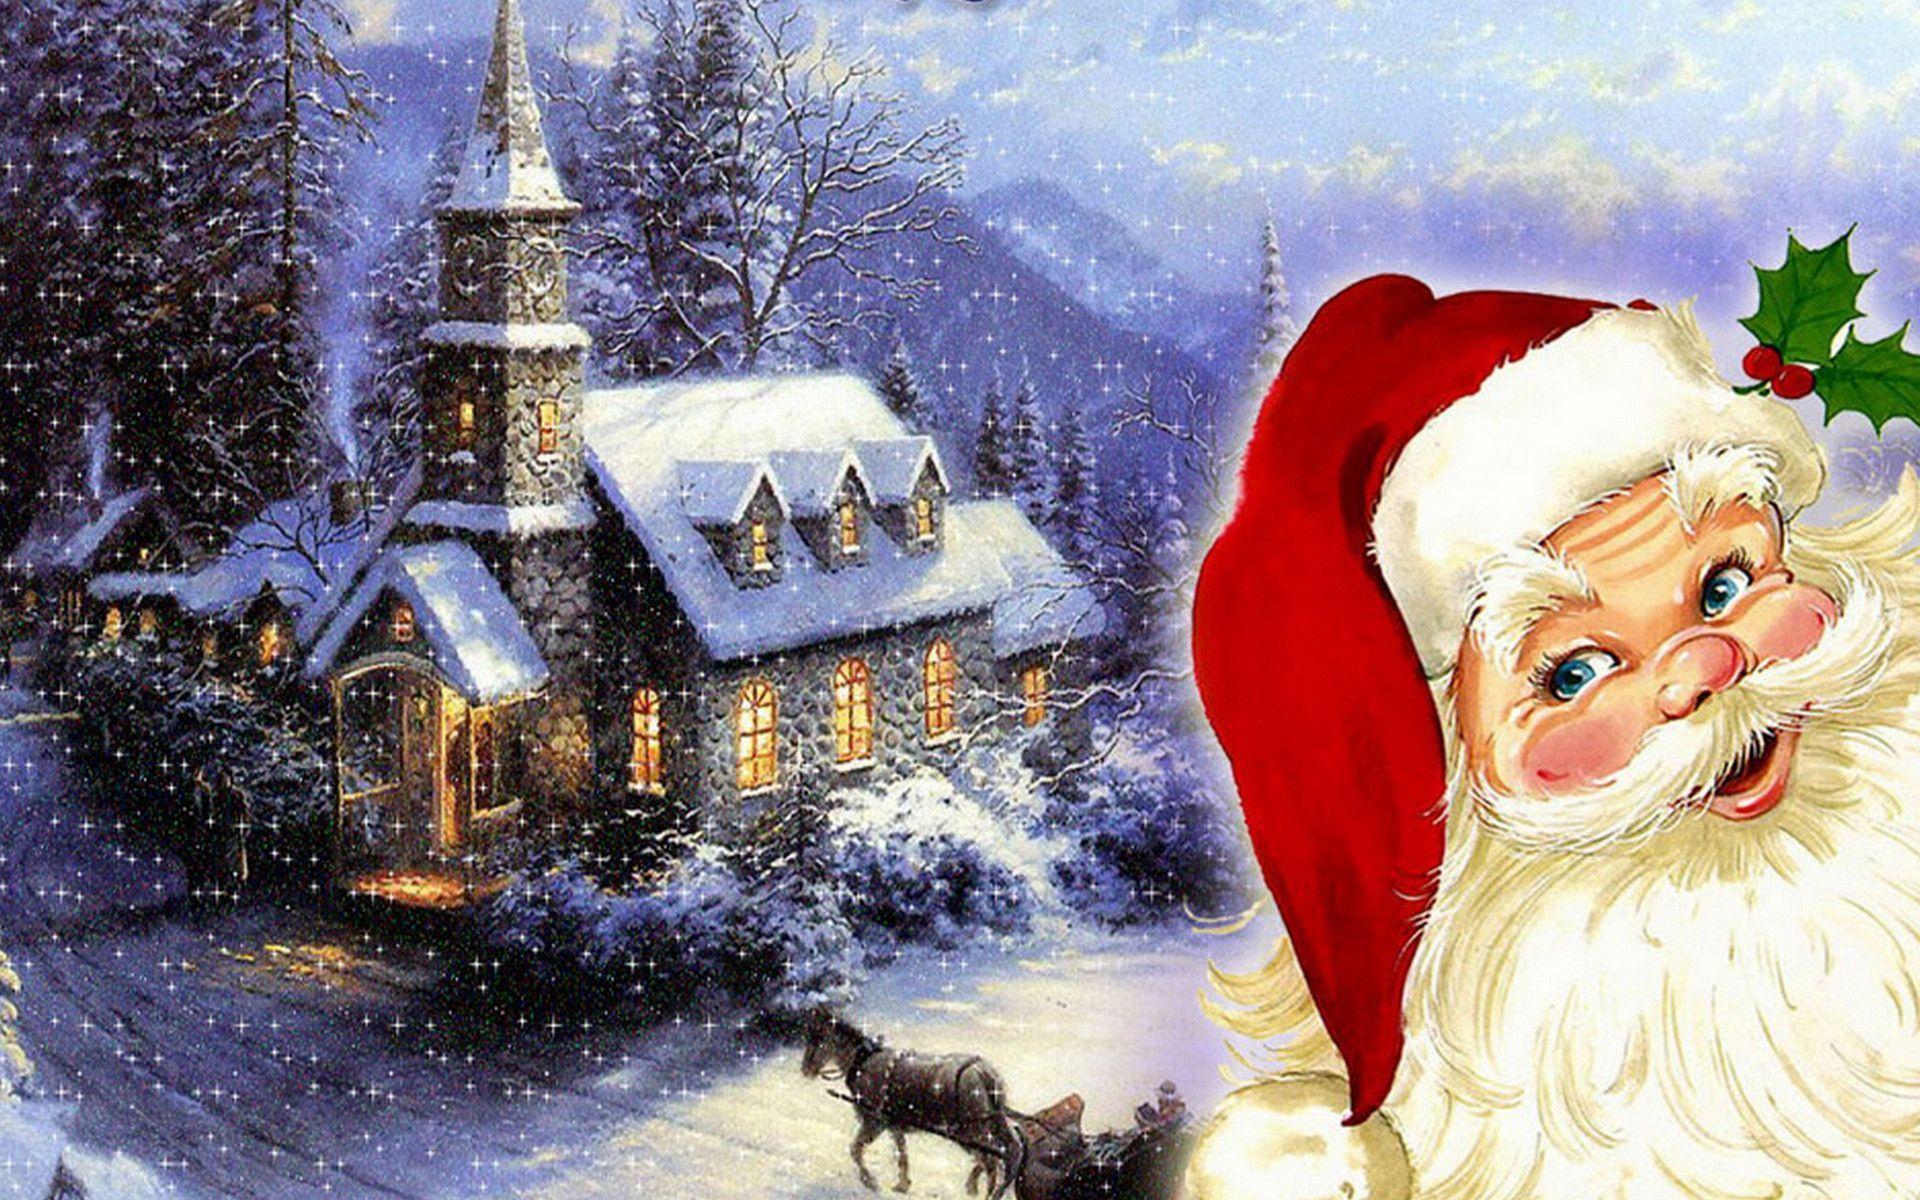 Santa Claus Image Wallpaper Download Wallpaper. High